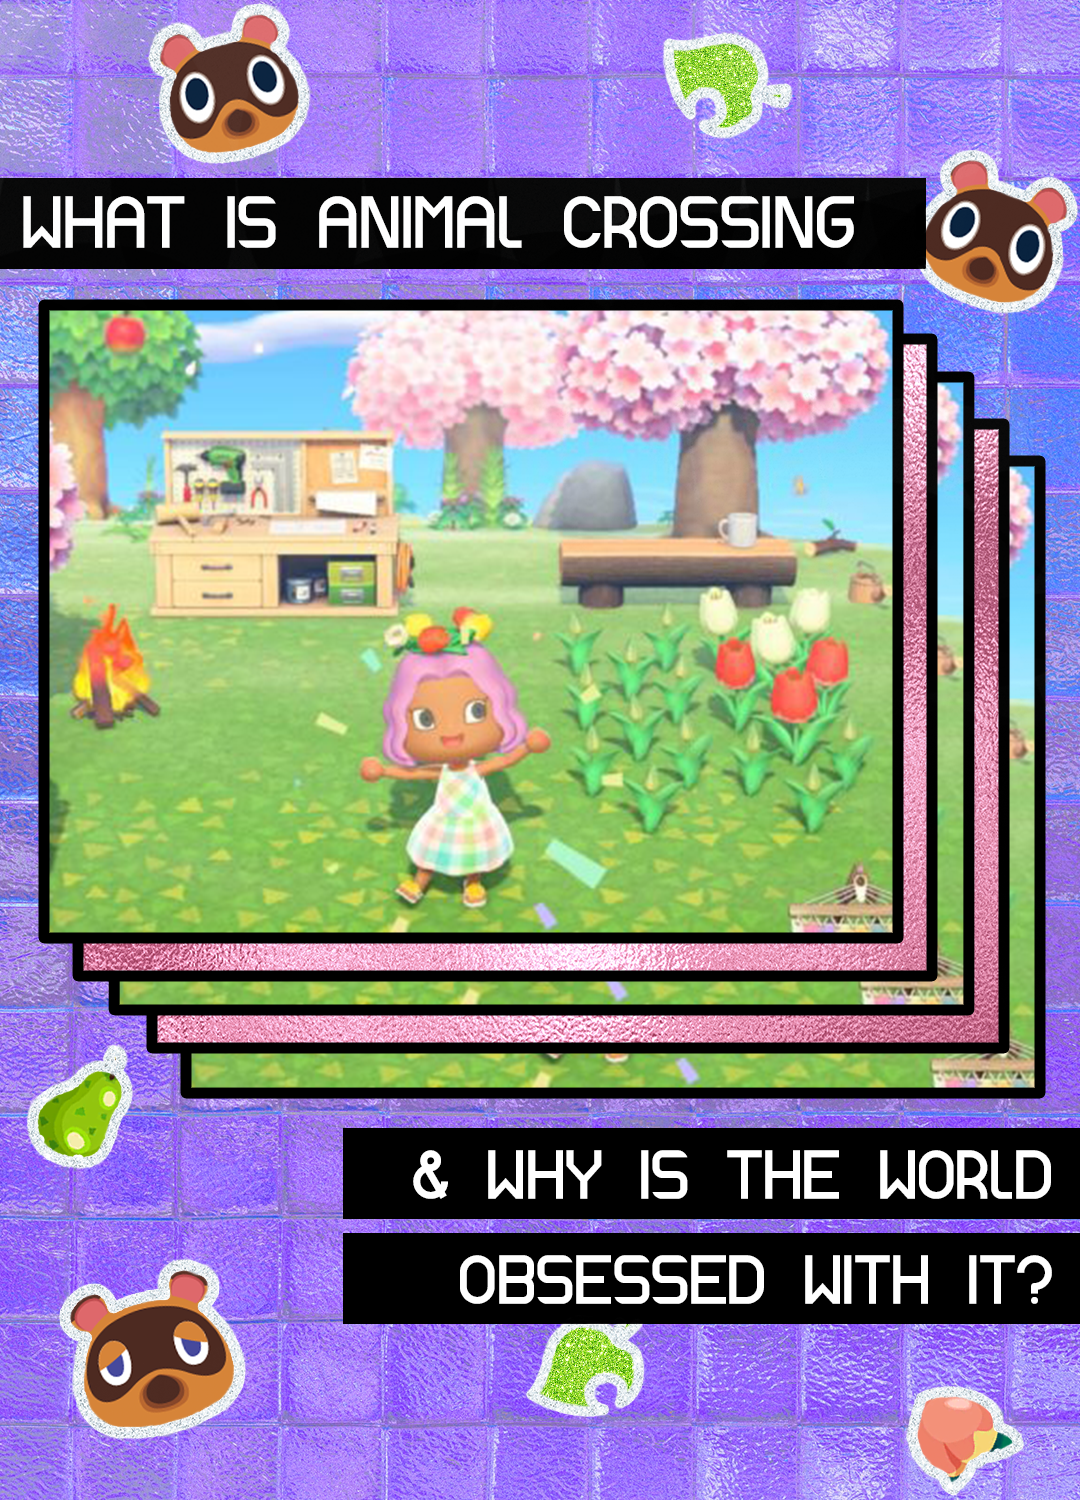 What is animal crossing new horizons screenshot